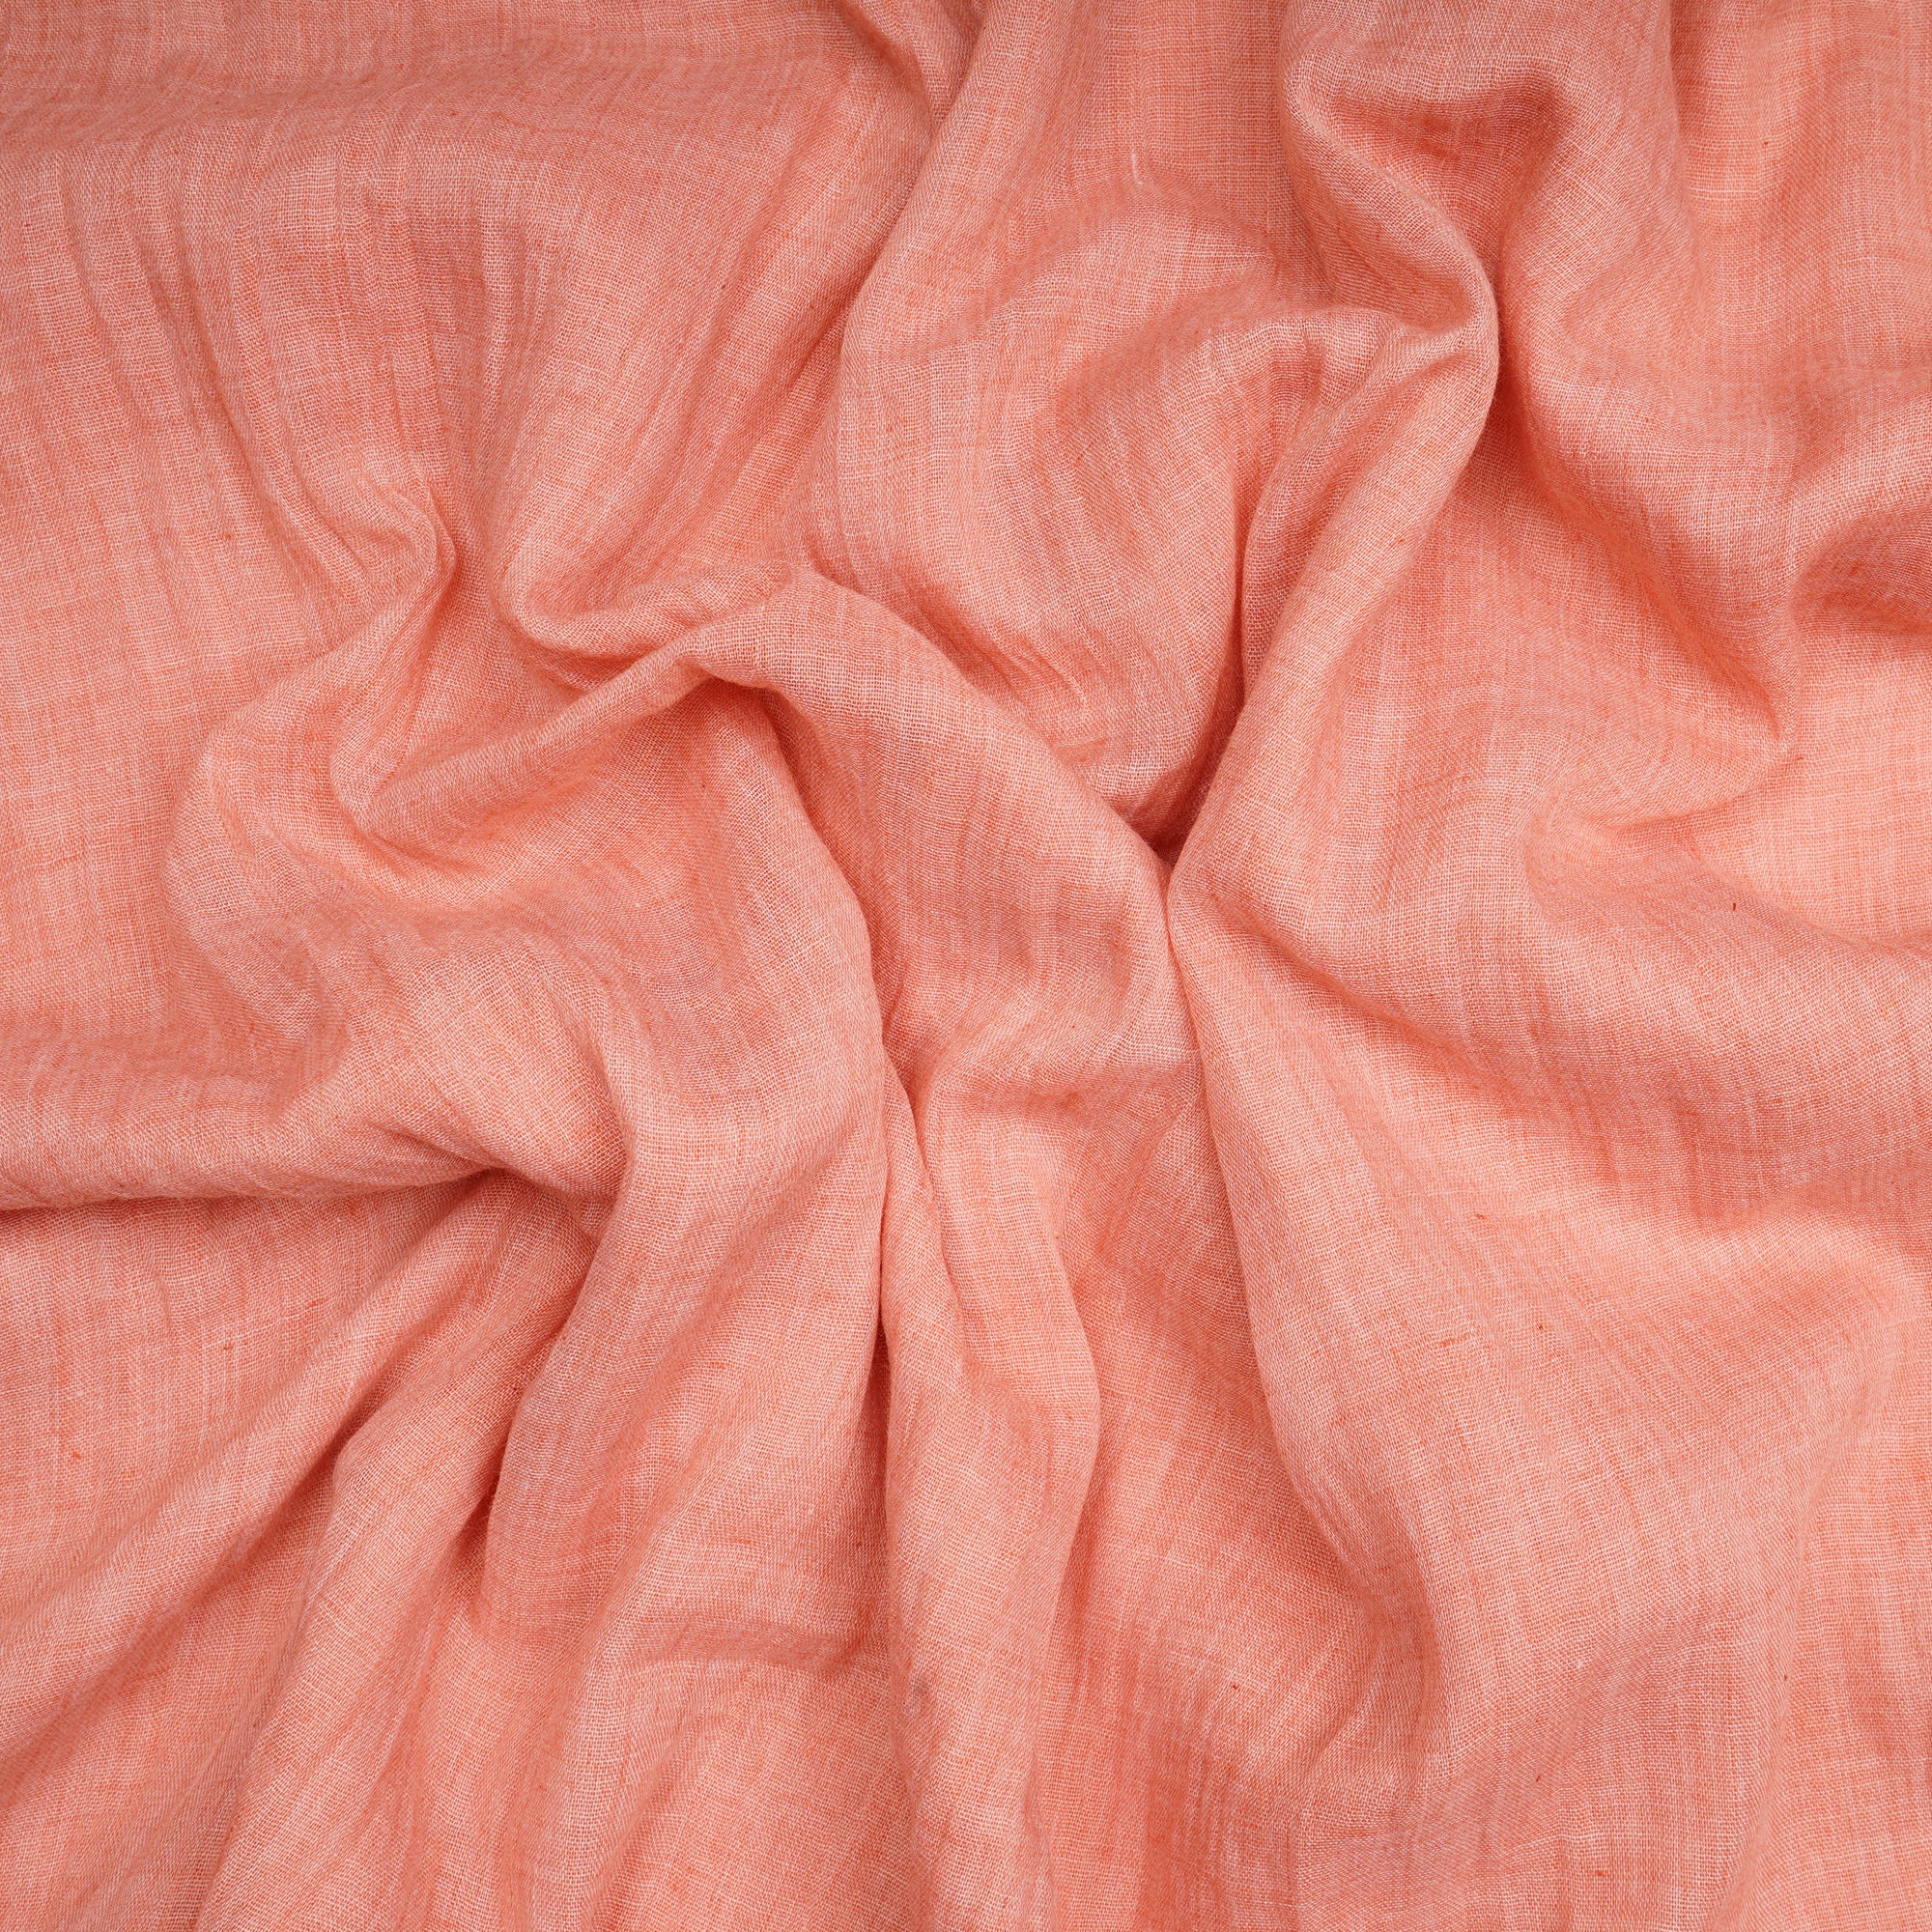 Peach Color Cheese Cotton Fabric